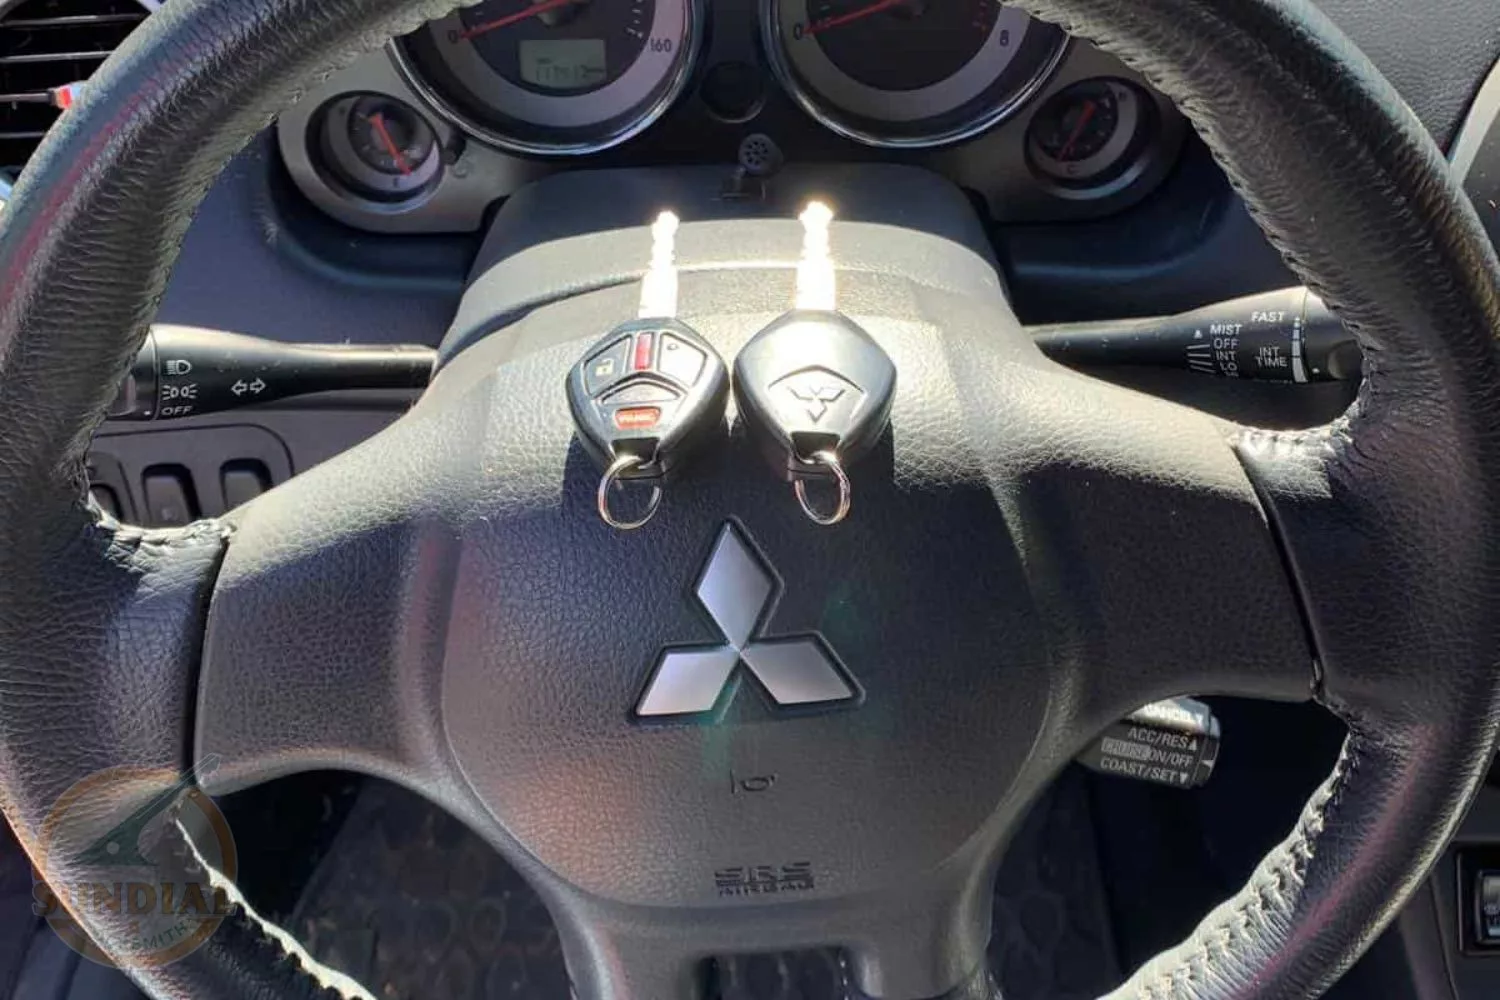 Mitsubishi car keys on a steering wheel